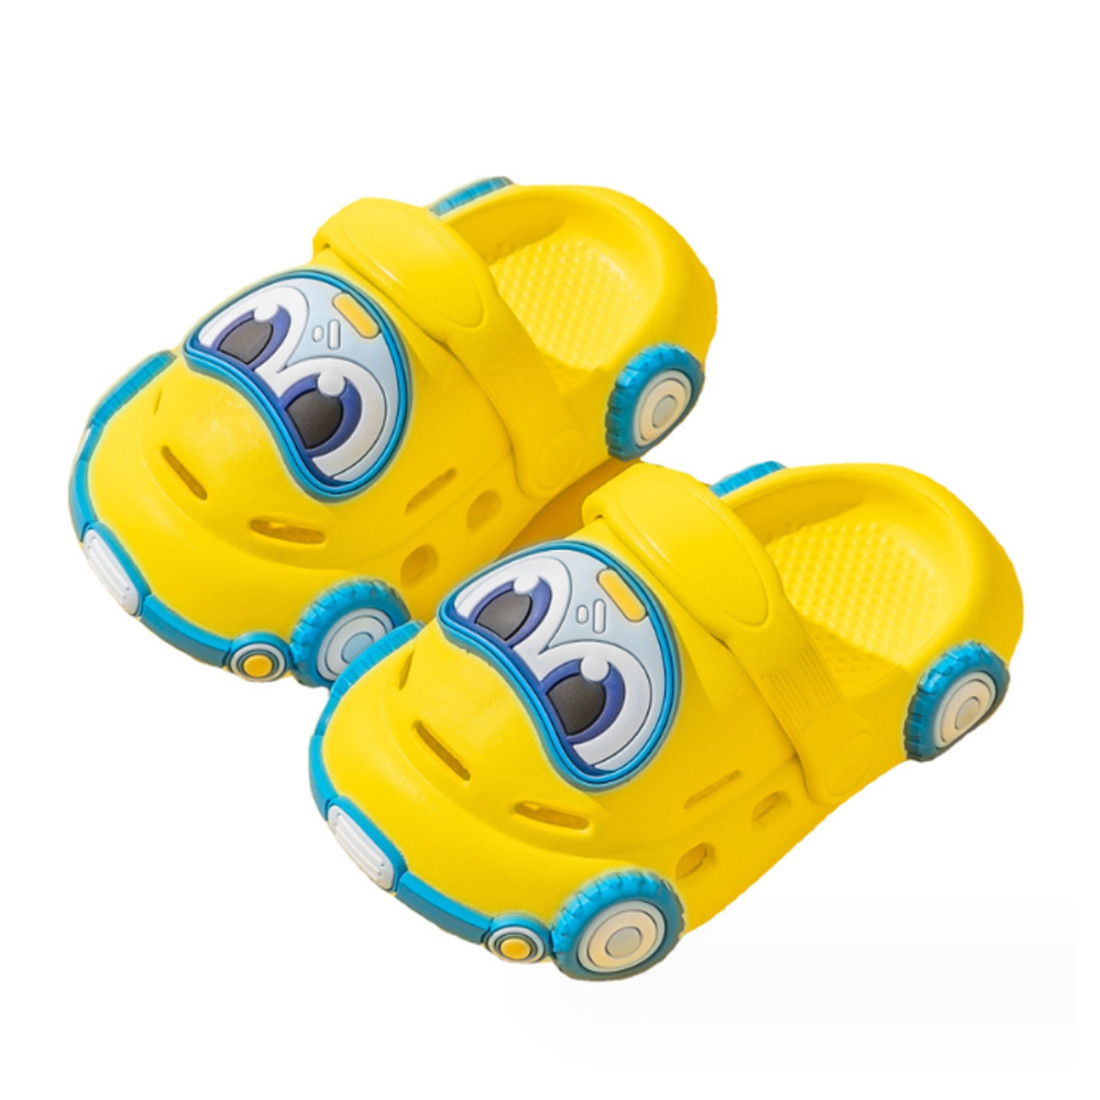 Sandalias para niño Diseño Coche Amarillo Talla 17 Mx